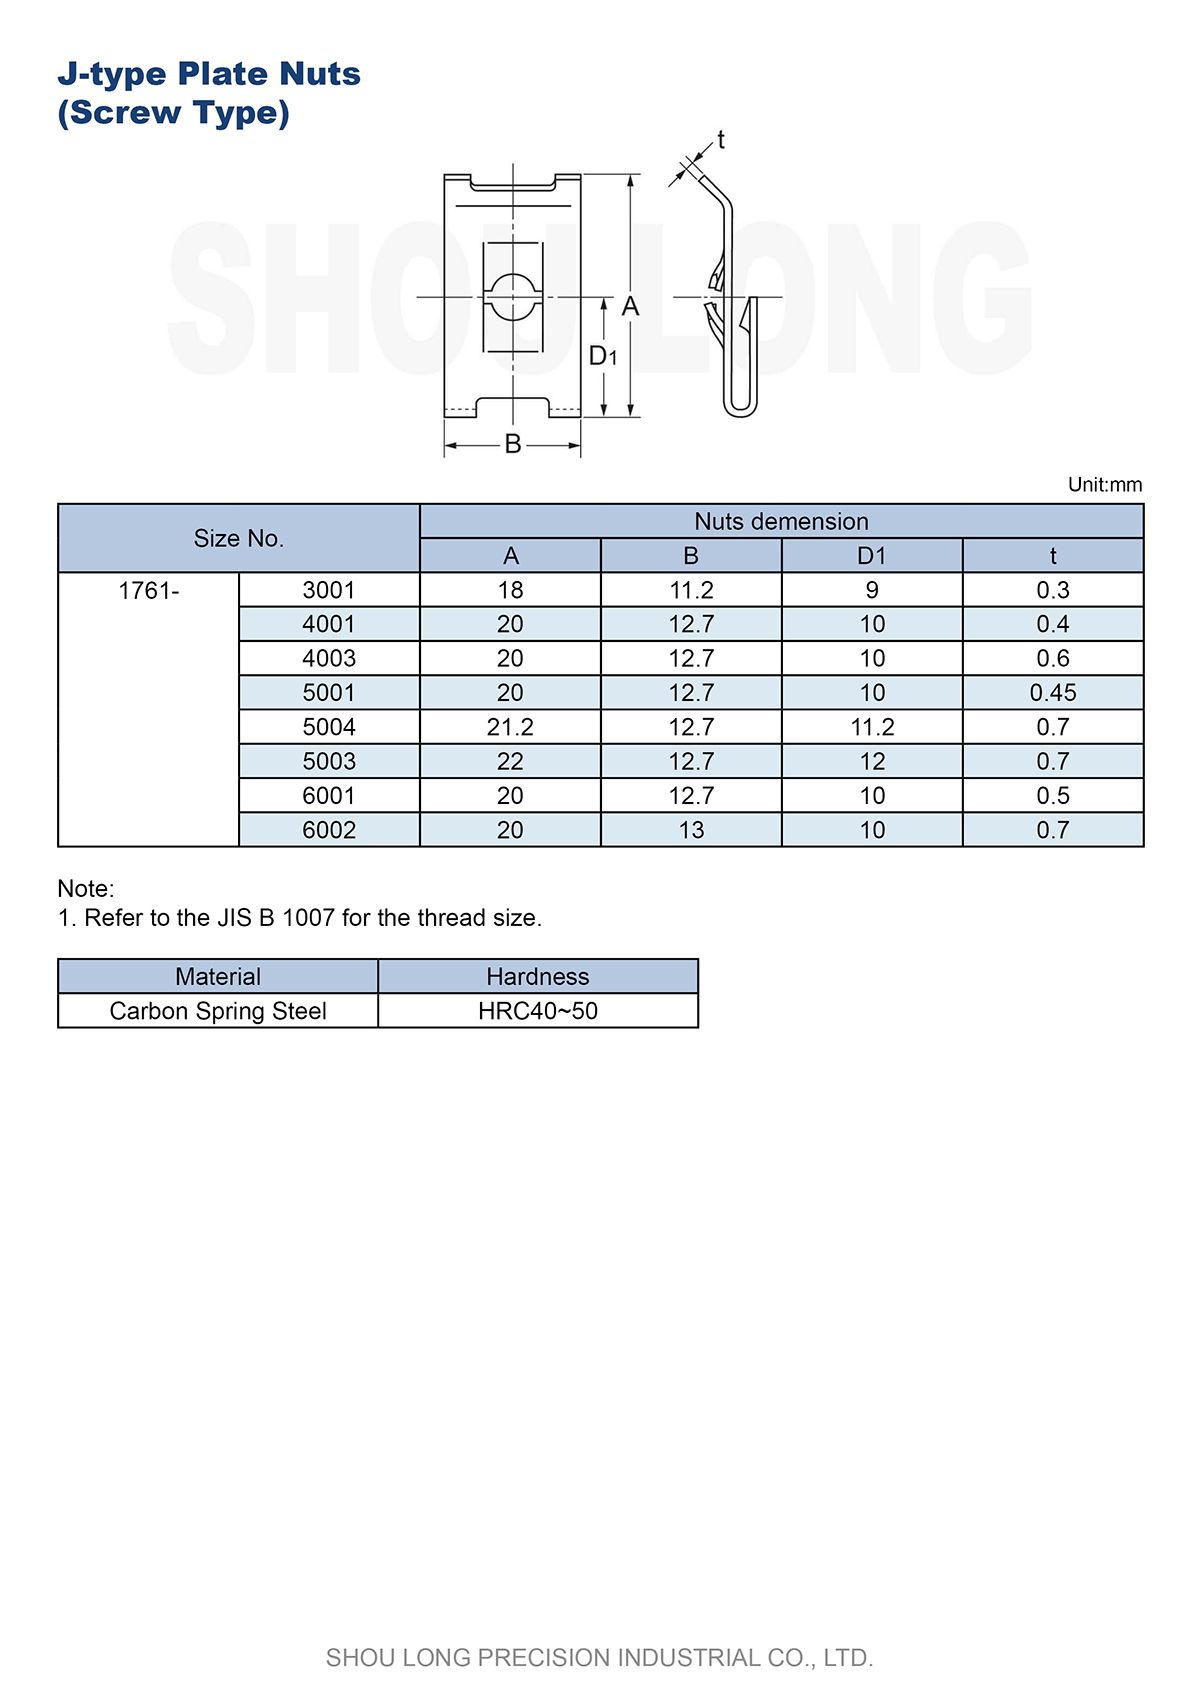 Спецификация гайки с плоской пластиной типа J по JIS метрической системе